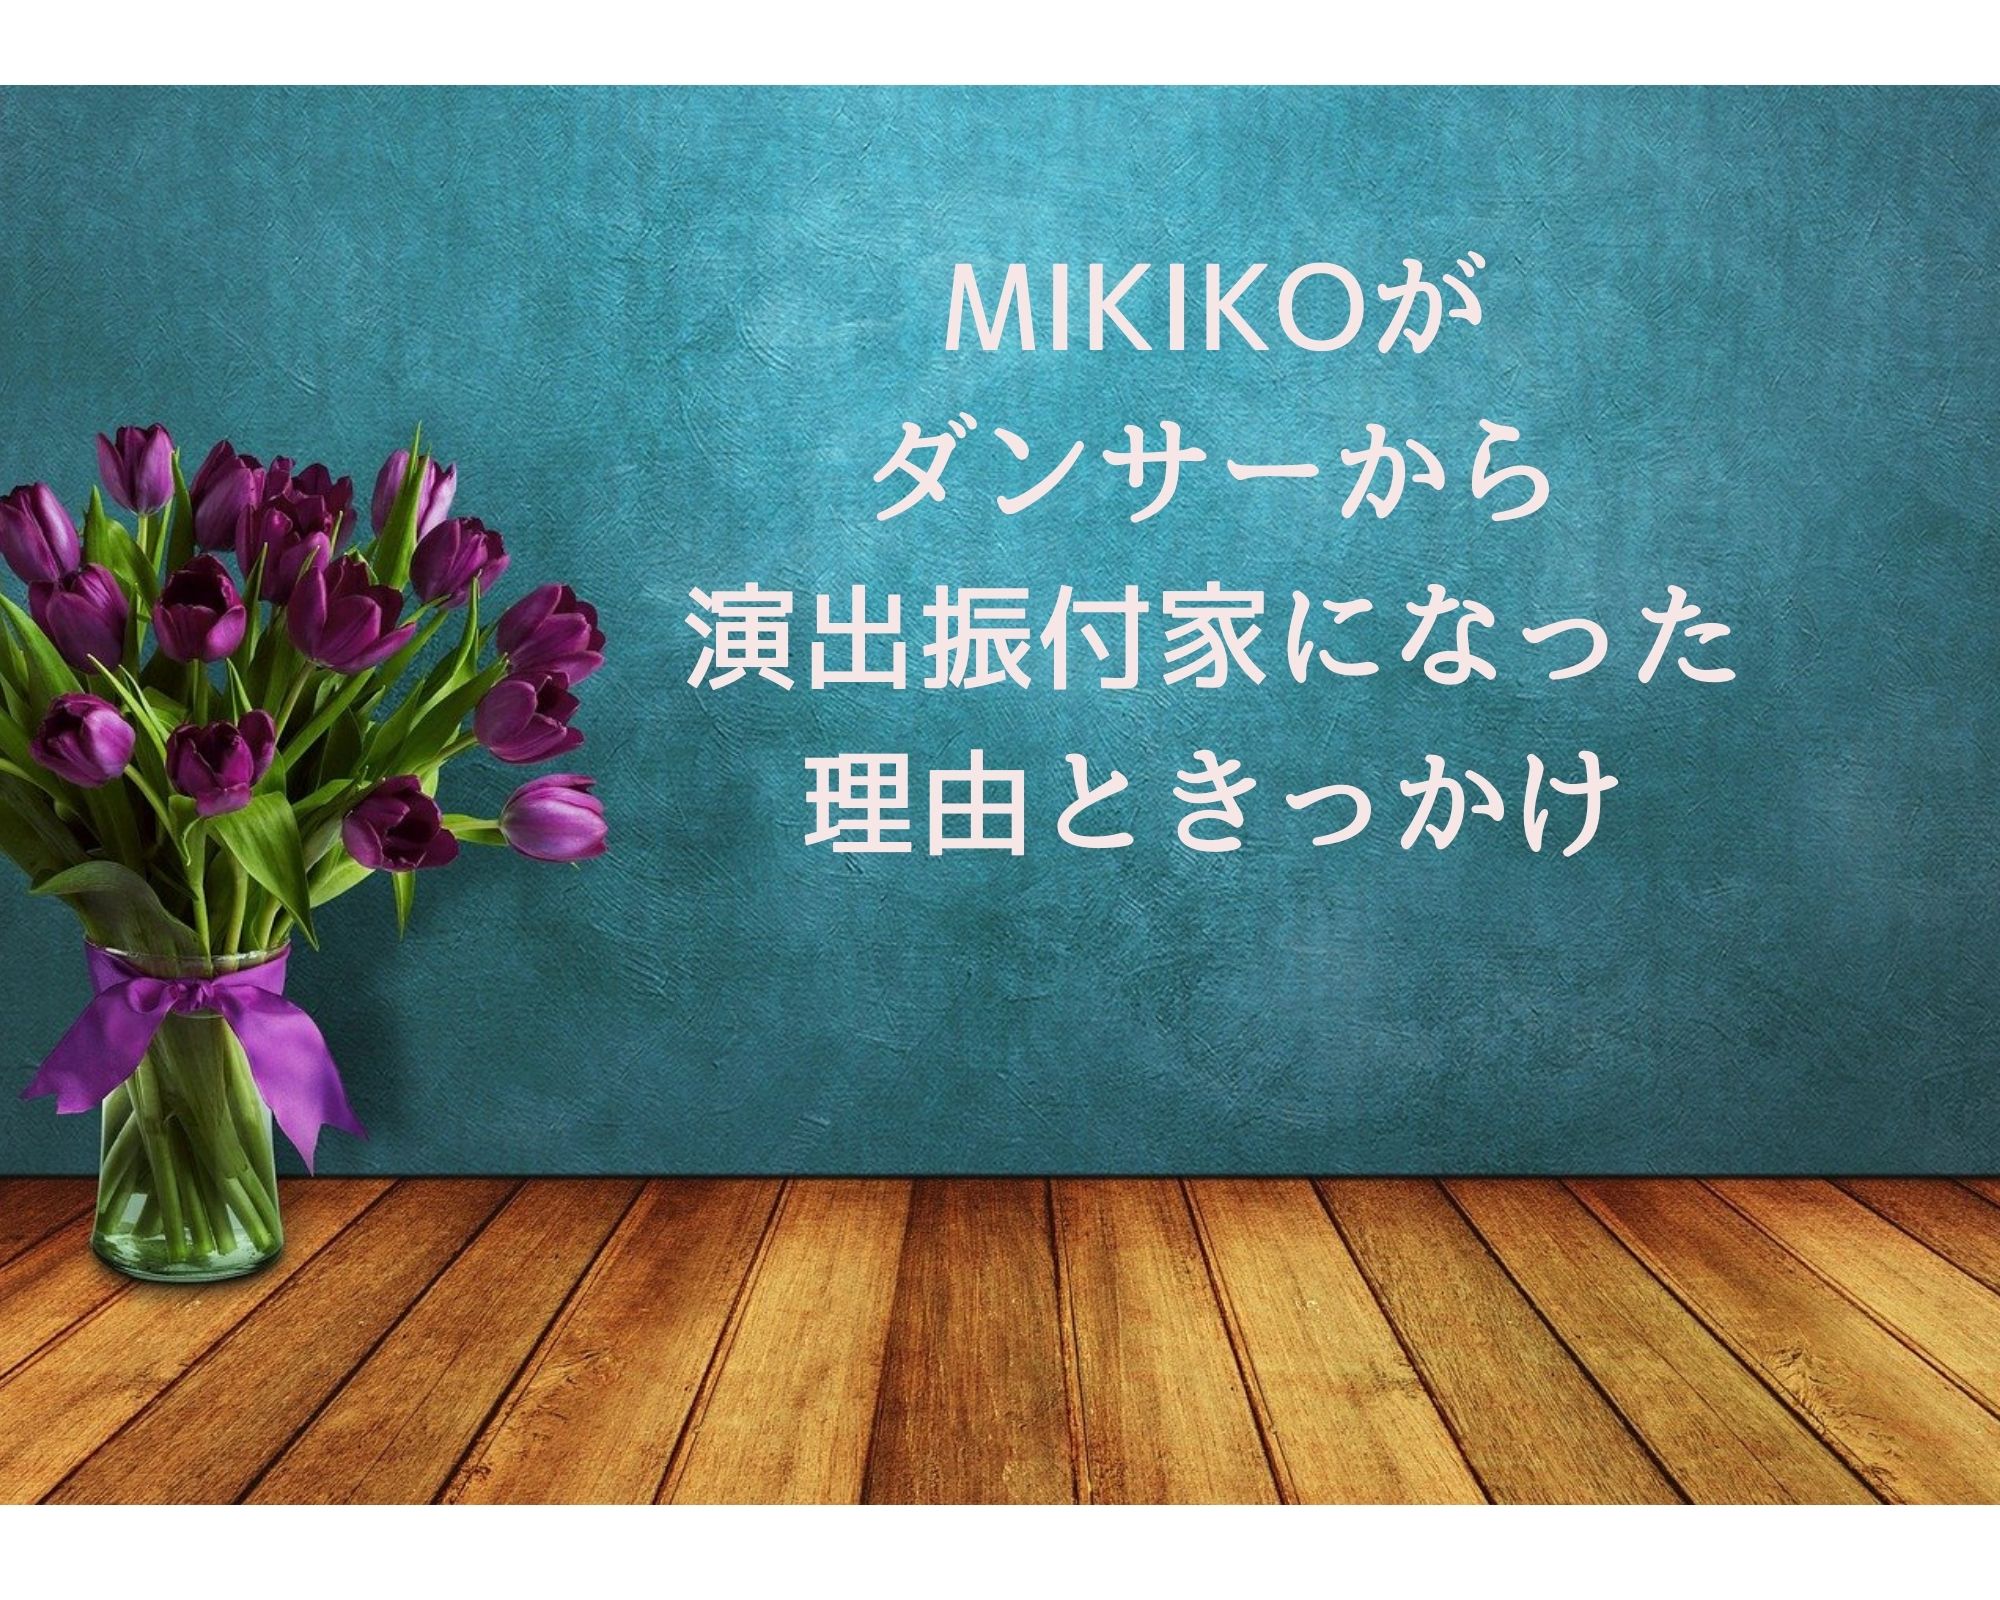 Mikikoがダンサーから振付師や演出家へ転身した理由ときっかけ うつくしきかなあうんの呼吸